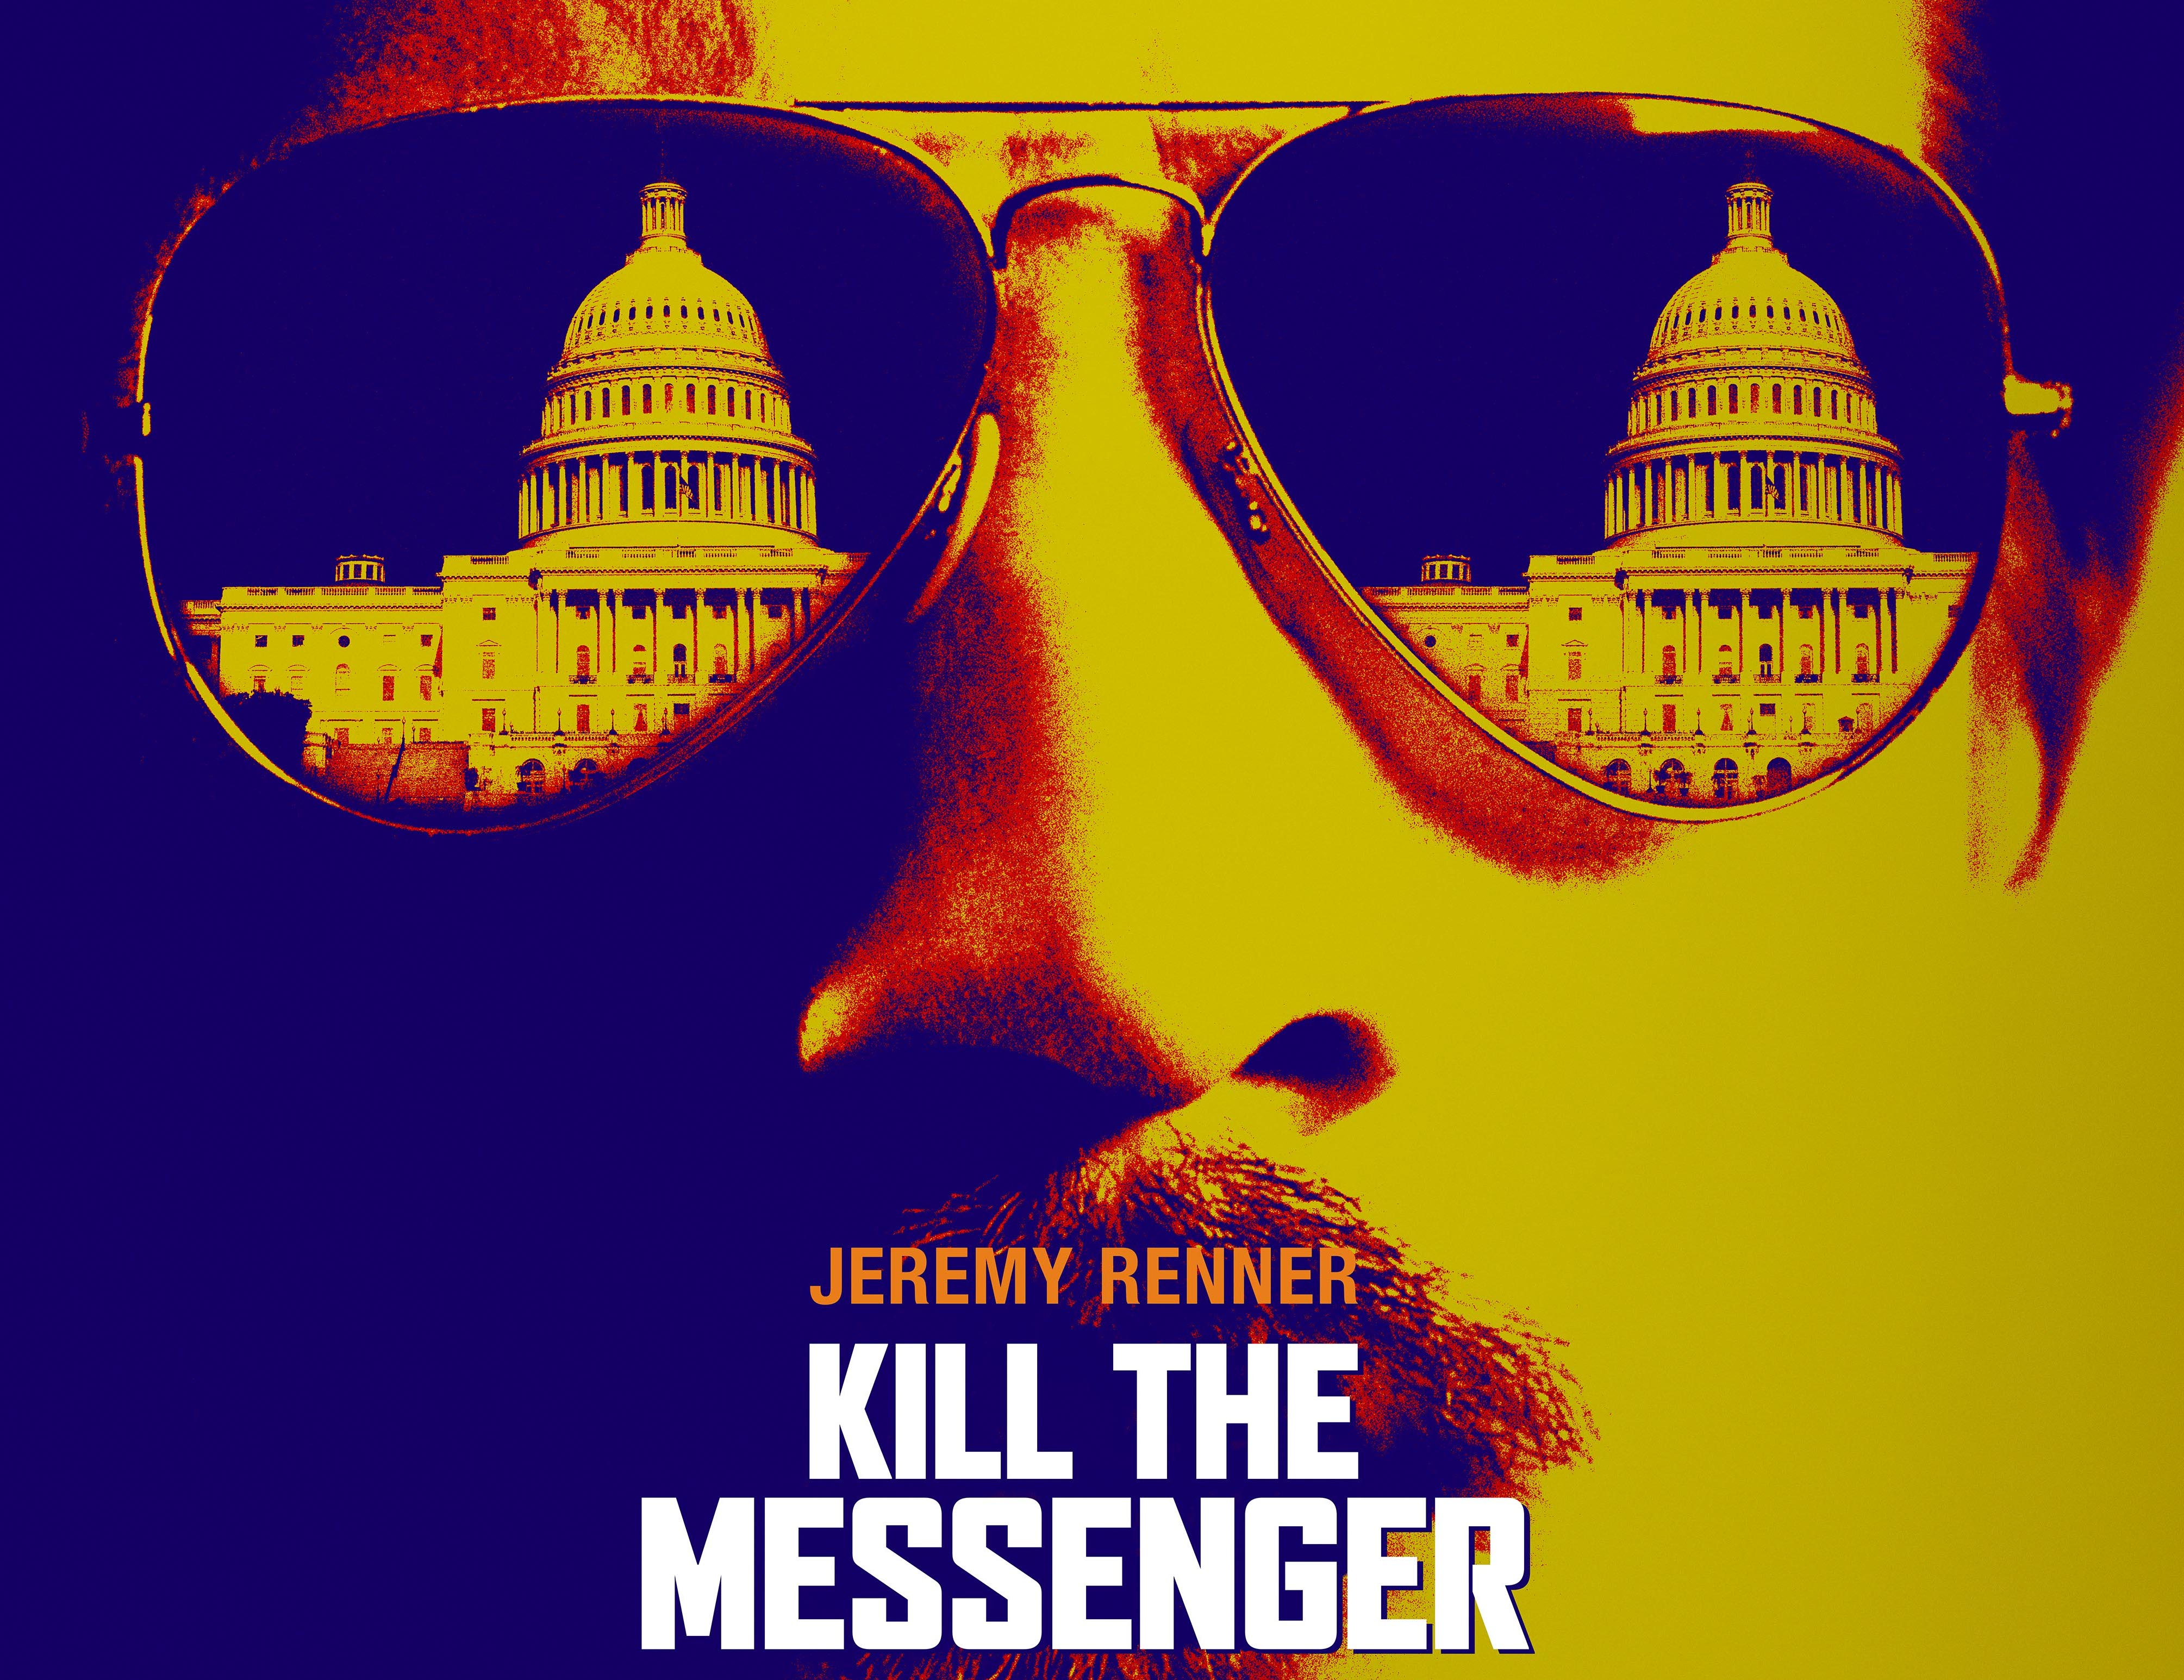 The Messenger плакат. Kill the Messenger 2014 poster.